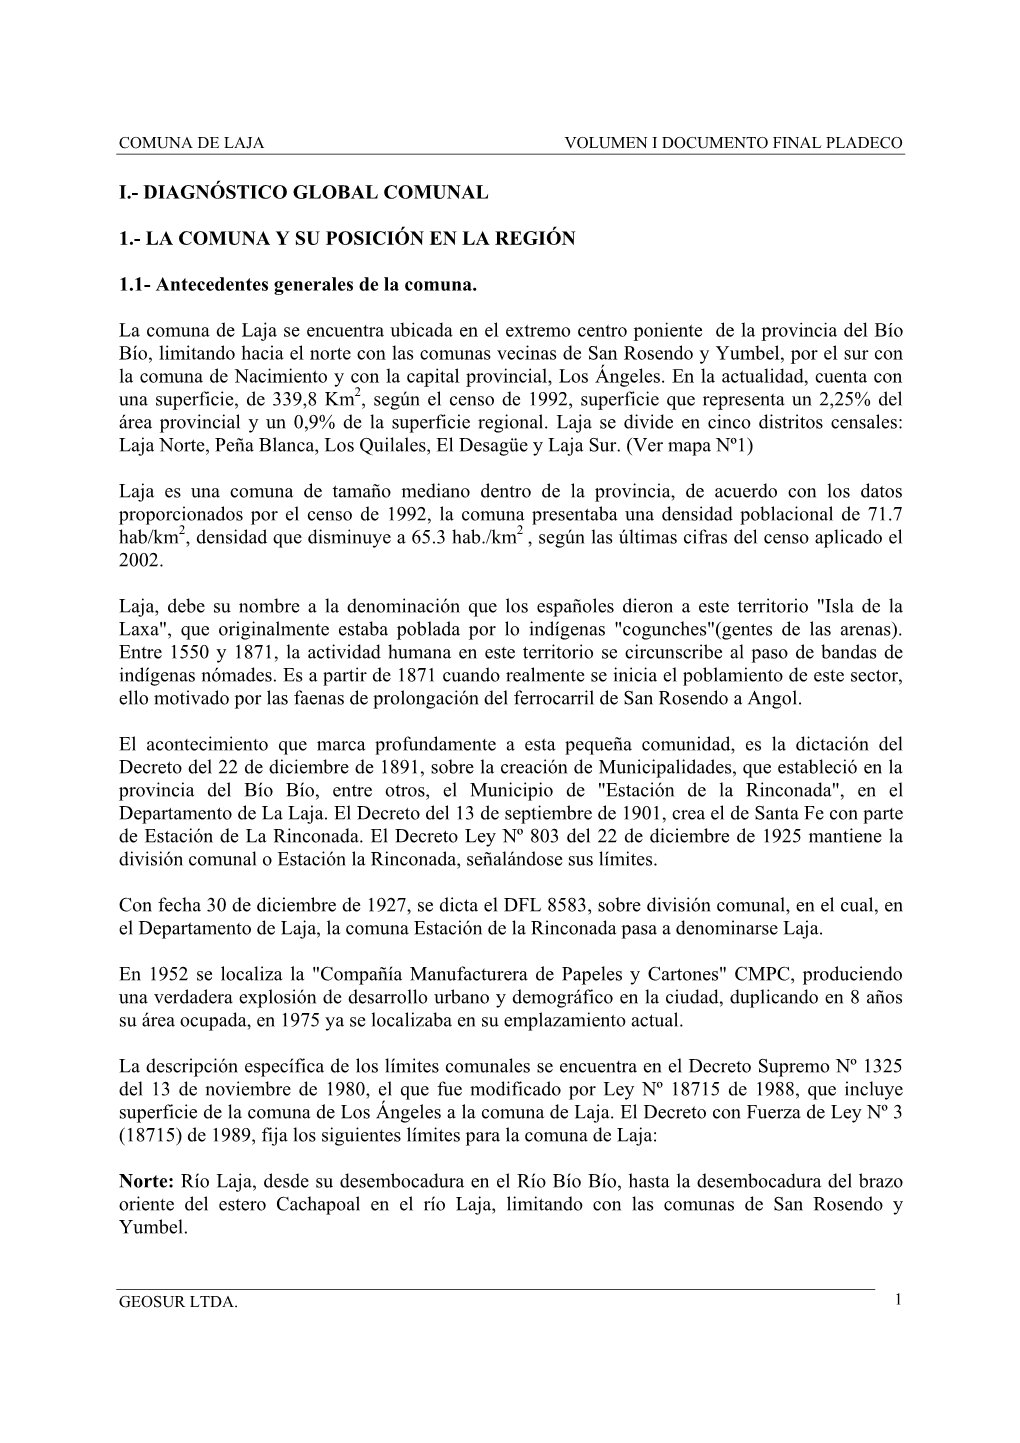 Comuna De Laja Volumen I Documento Final Pladeco Geosur Ltda. 1